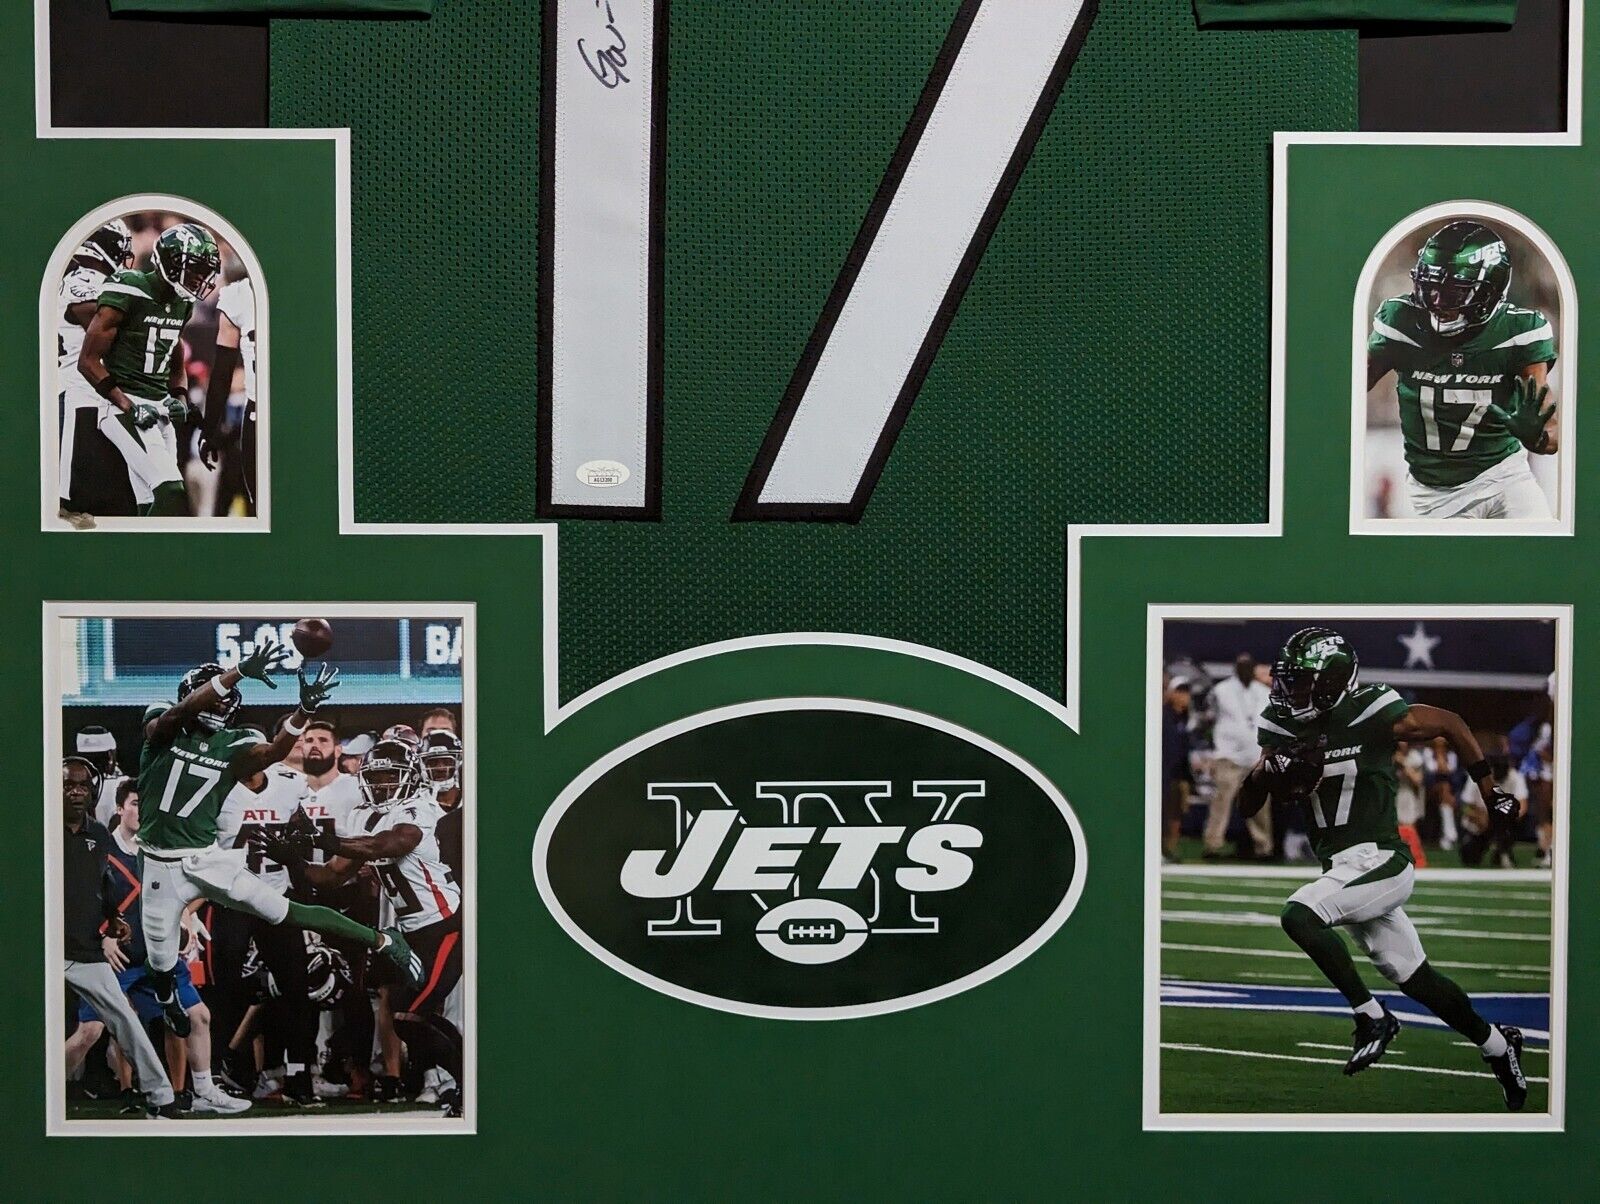 MVP Authentics Framed New York Jets Garrett Wilson Autographed Signed Jersey Jsa Coa 450 sports jersey framing , jersey framing